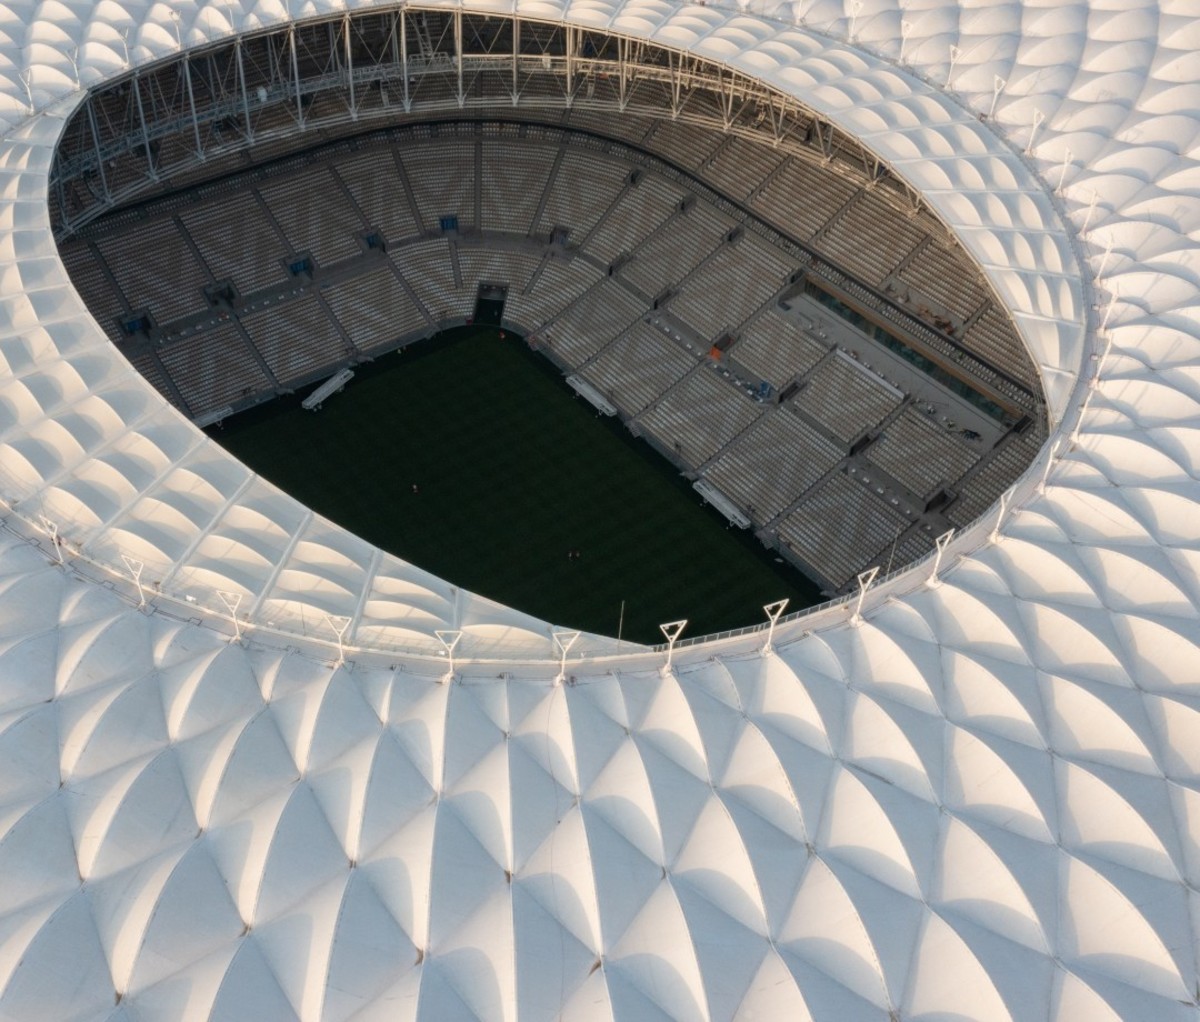 Aerial view of white geometric stadium